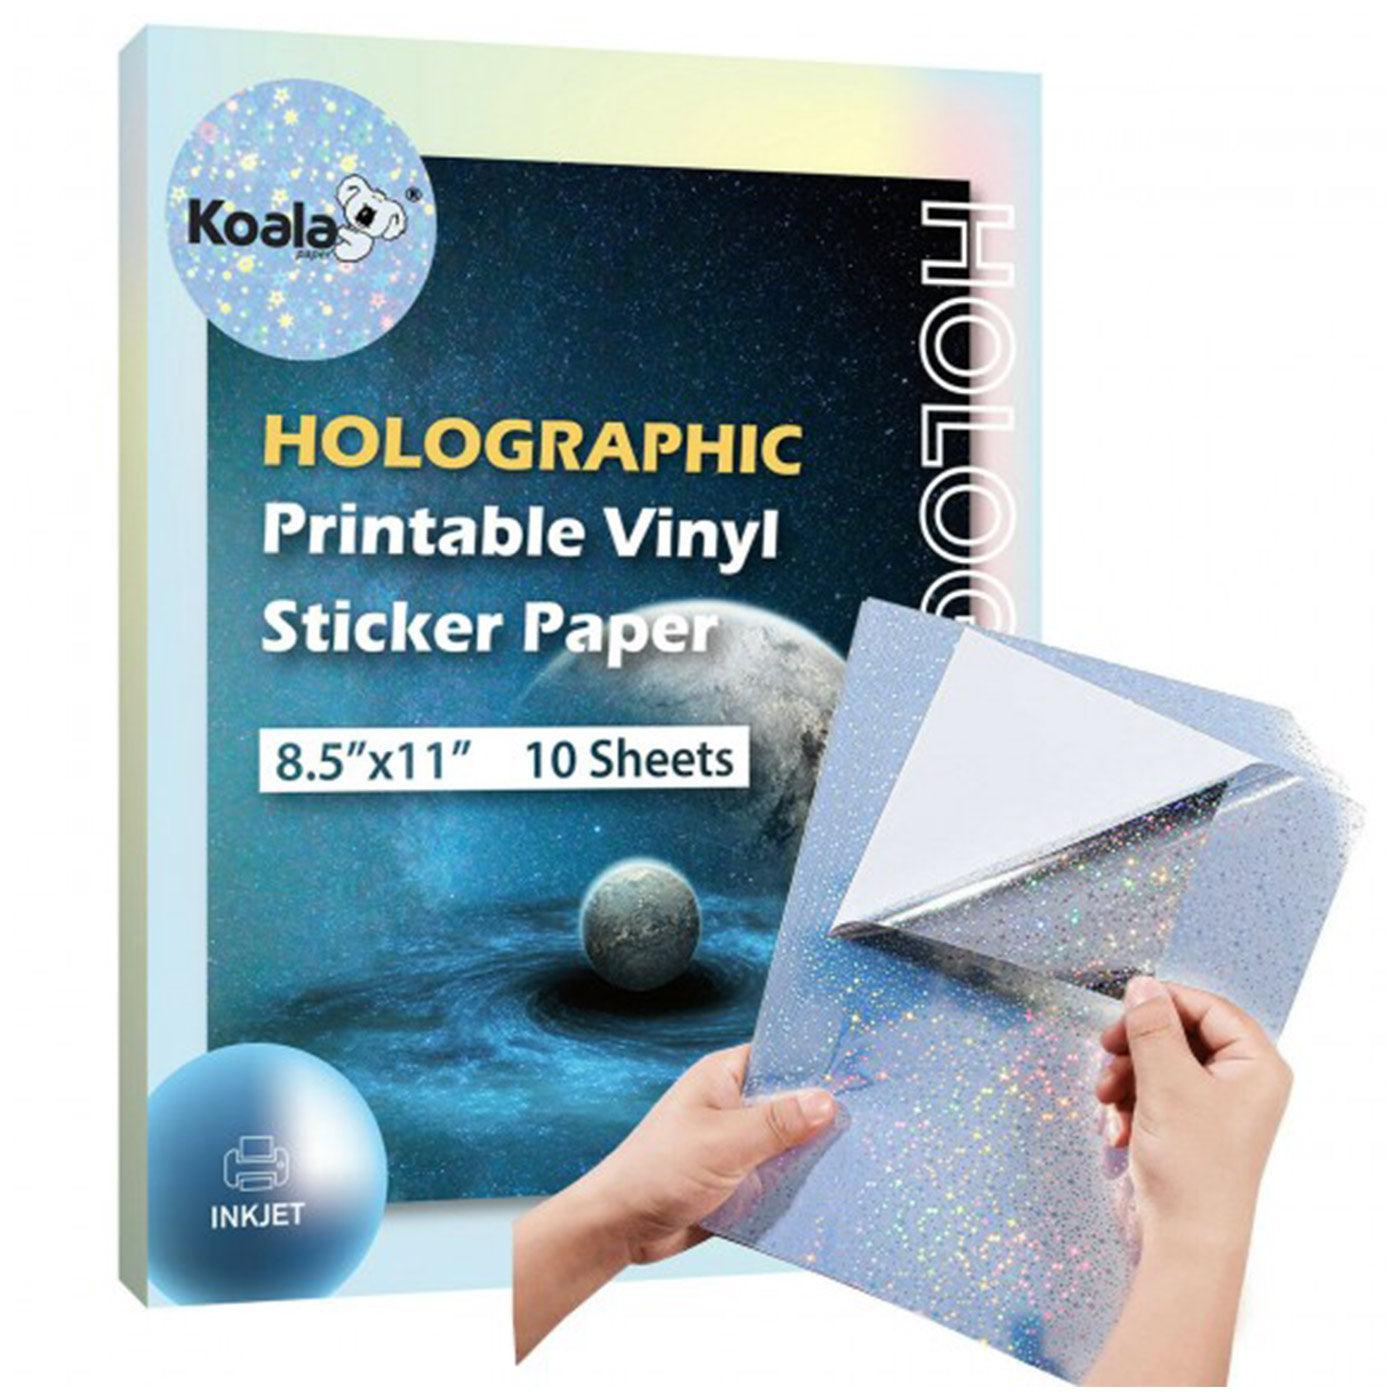 Koala Holographic Rainbow Vinyl Sticker Paper for Inkjet Printer Starry 8.5x11 Inches 10 Sheets